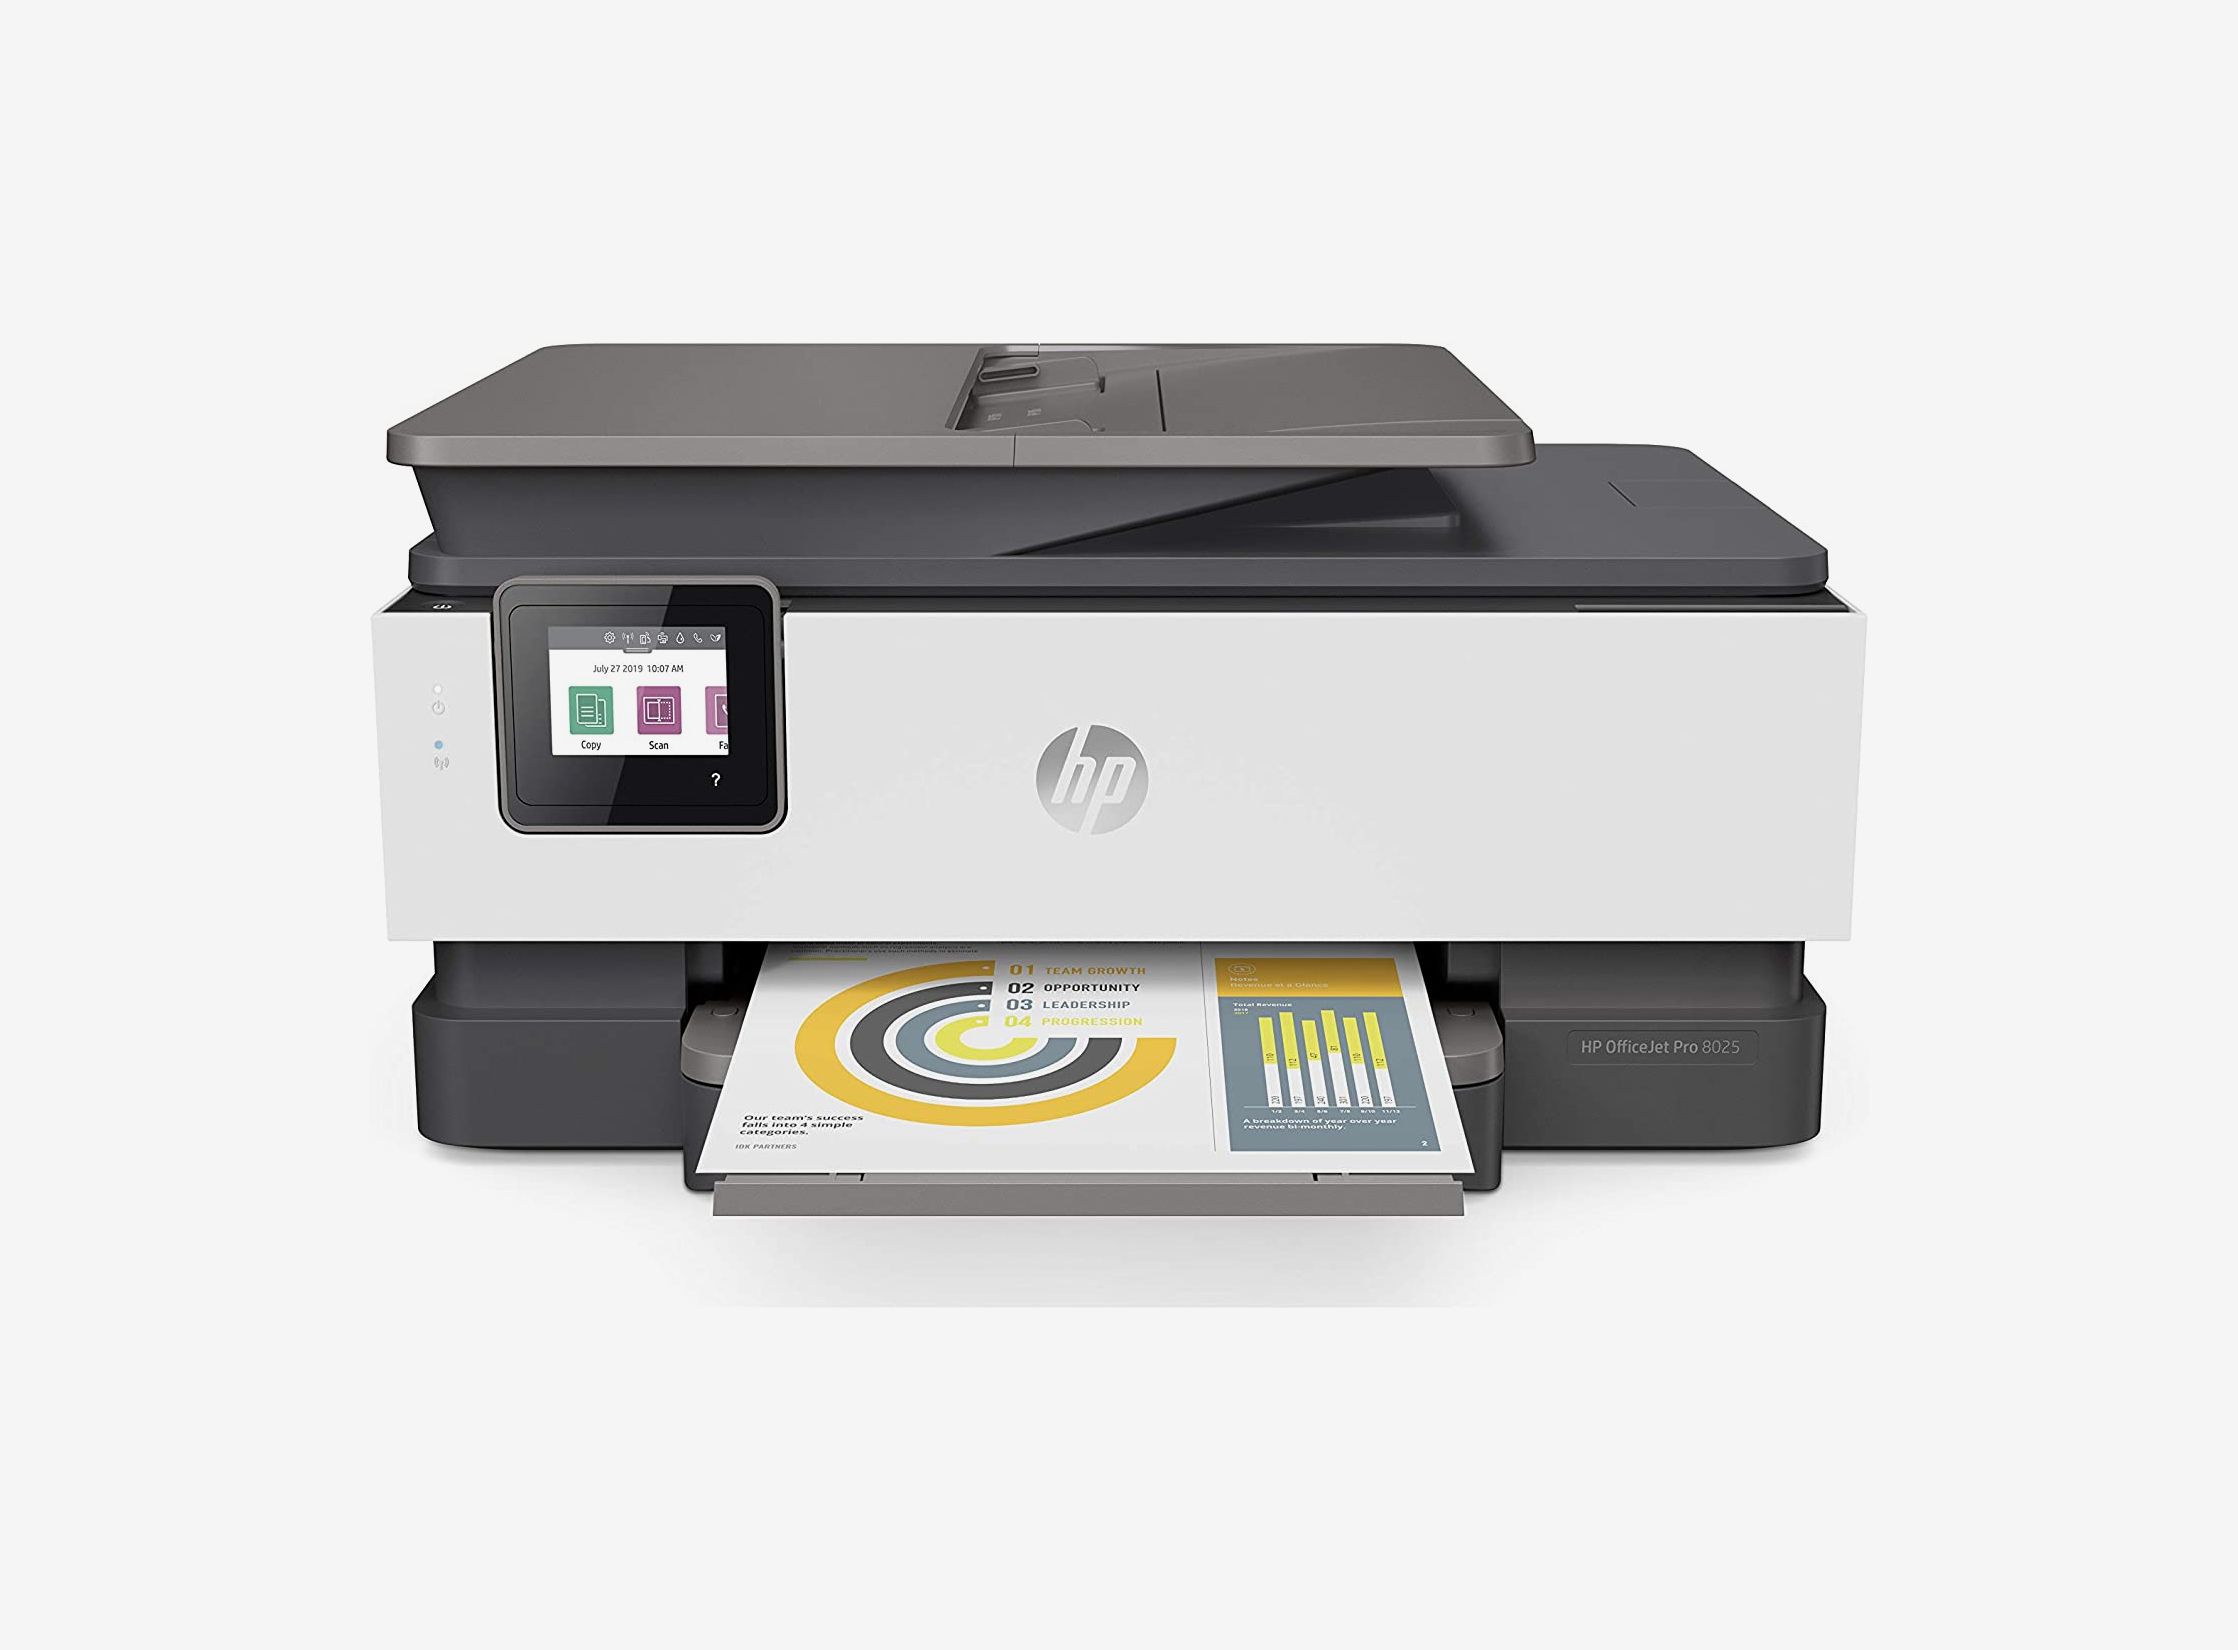 Billedhugger velstand Skylight 11 Best Home-Office Printers 2022 | The Strategist